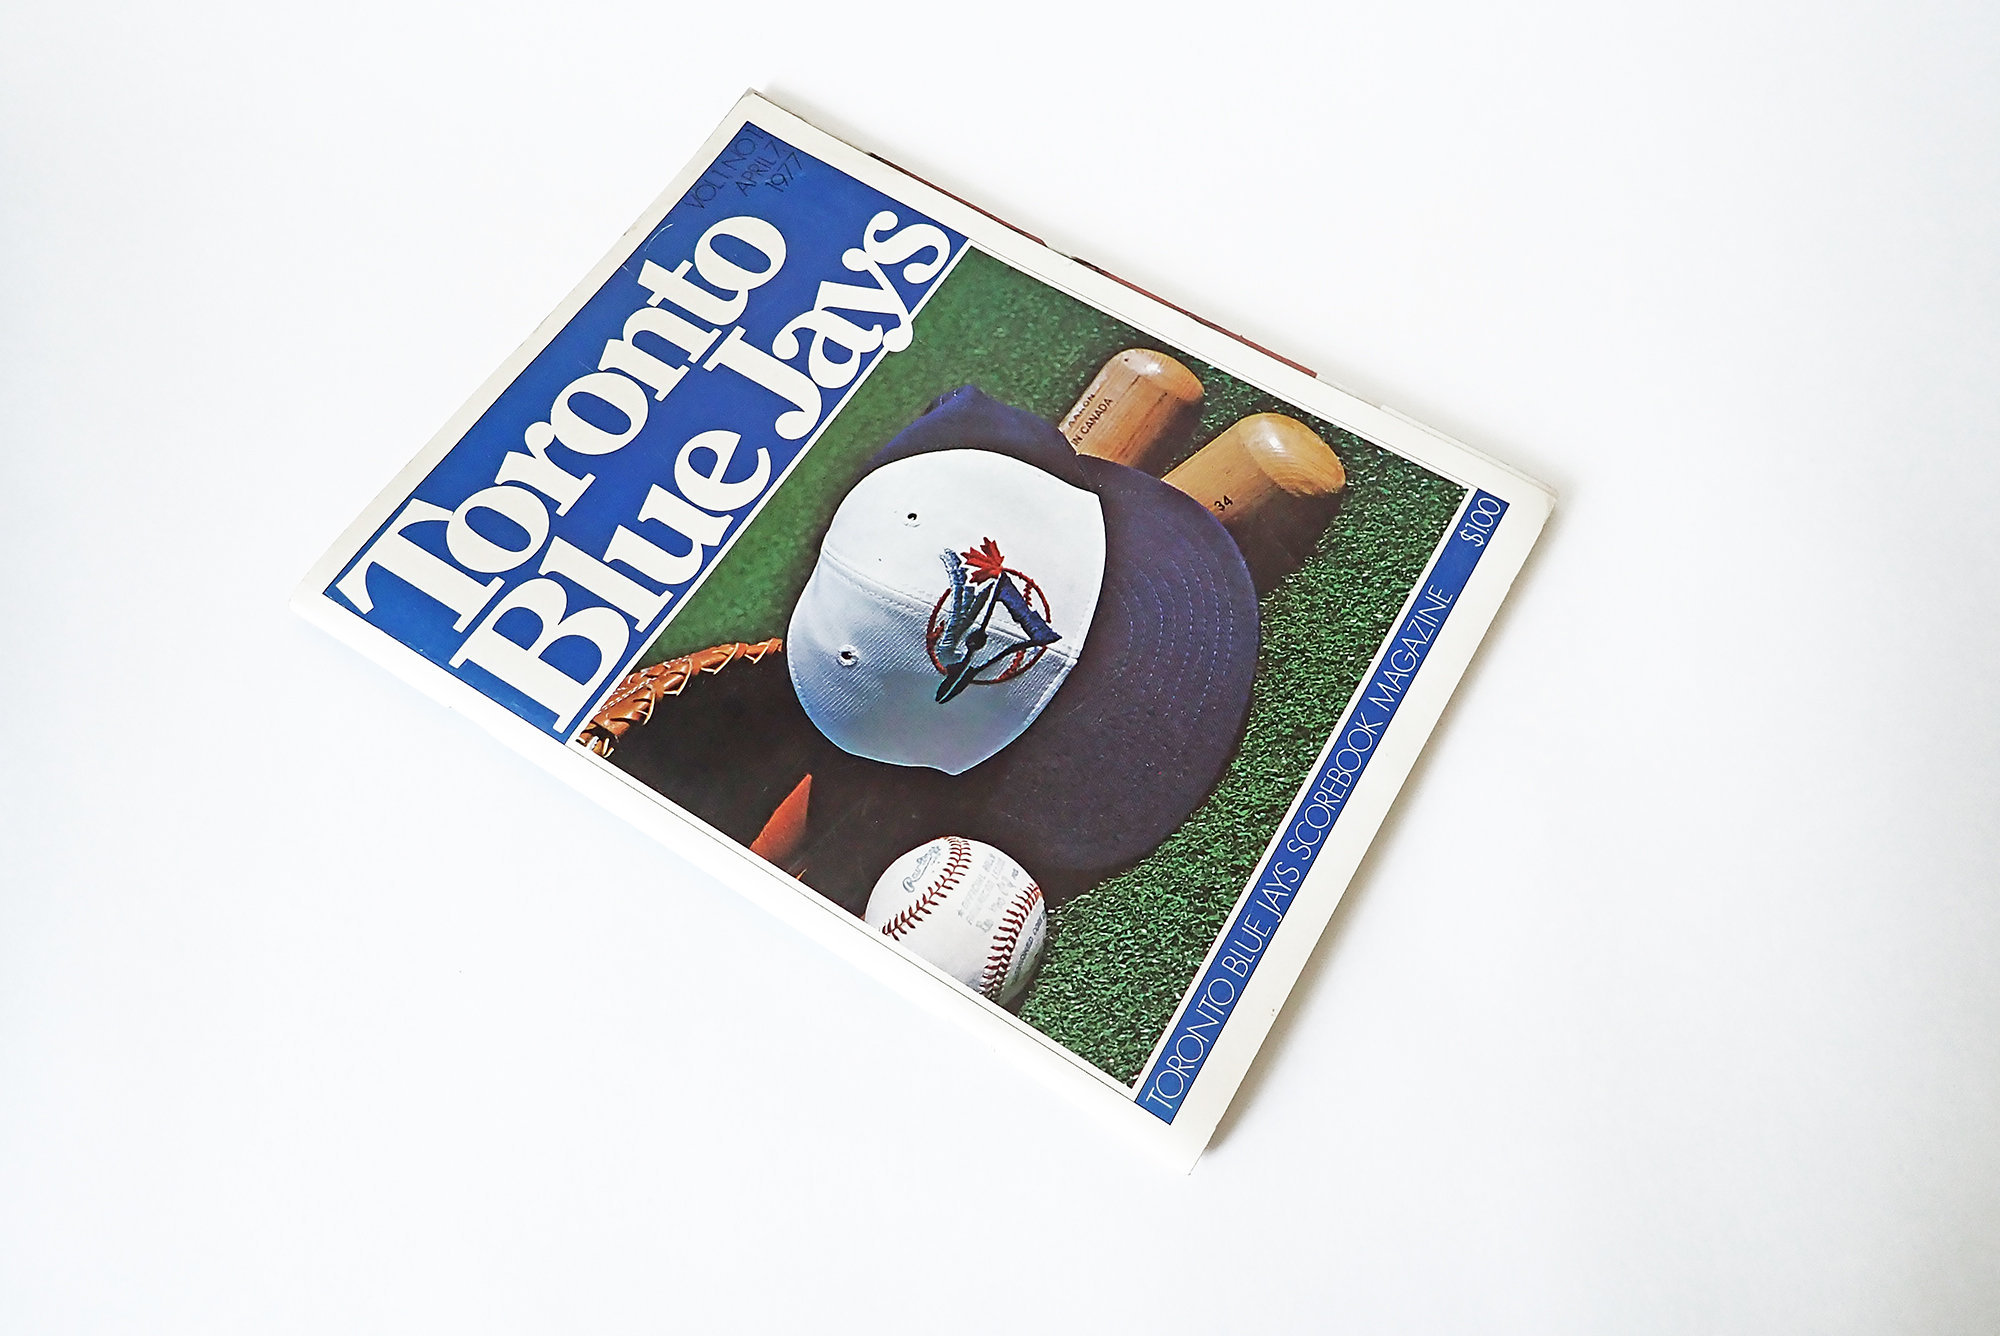 1977 TORONTO BLUE JAYS Scoreboard Magazine Vol. 1 No. 15